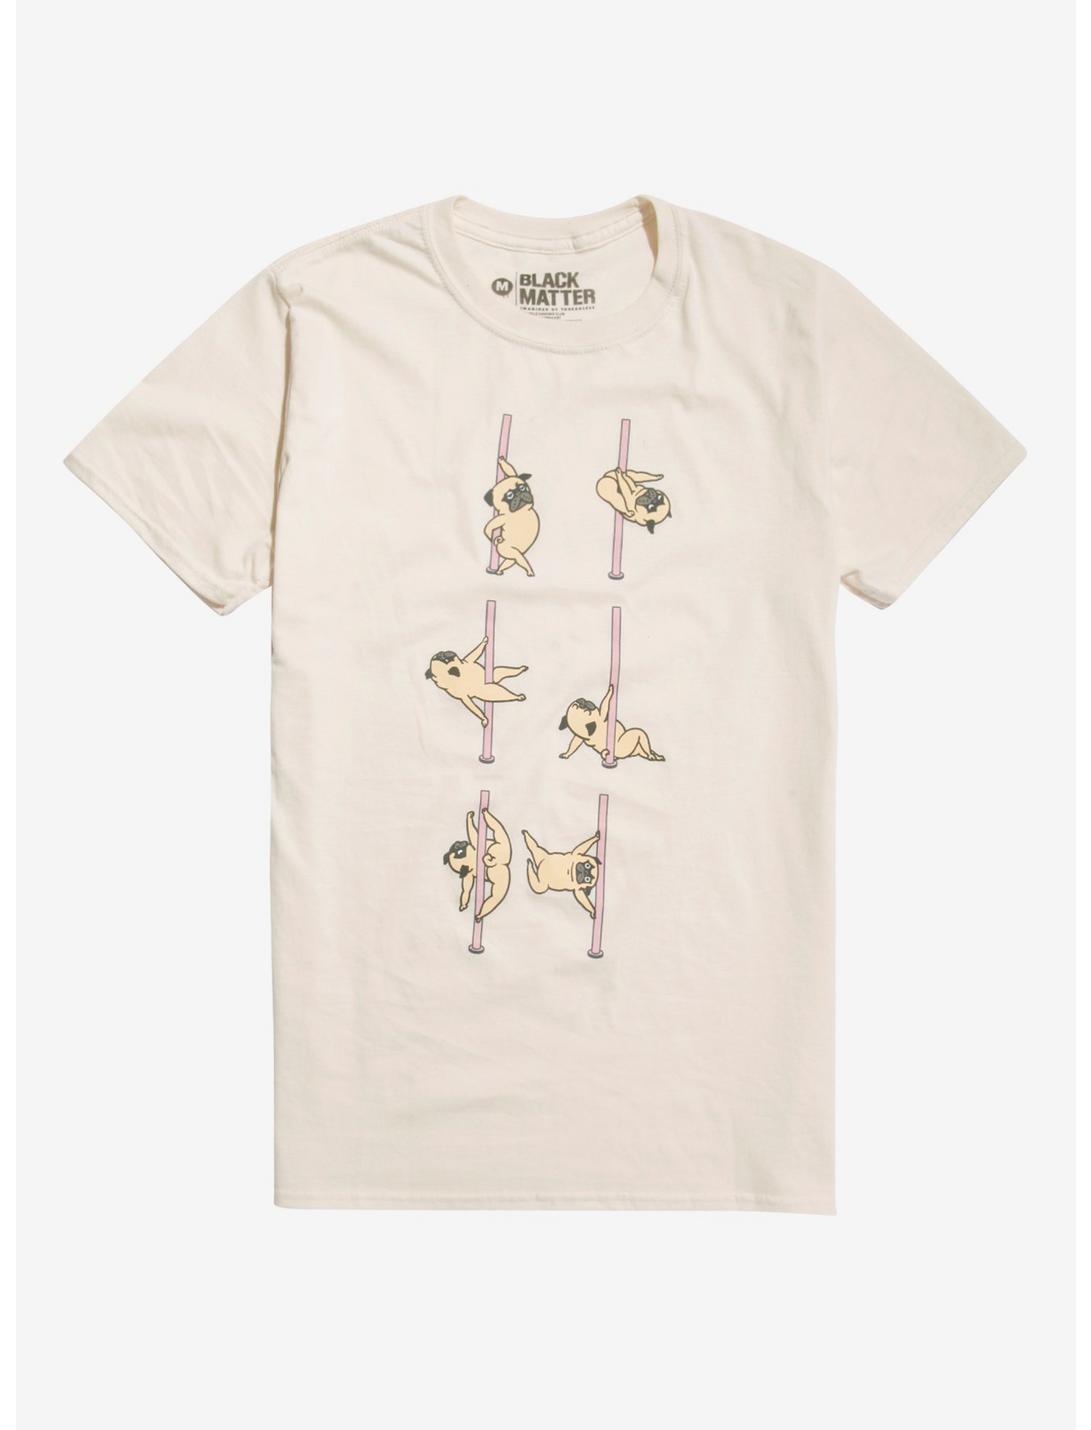 Pug Pole-Dancing Club T-Shirt, SAND, hi-res